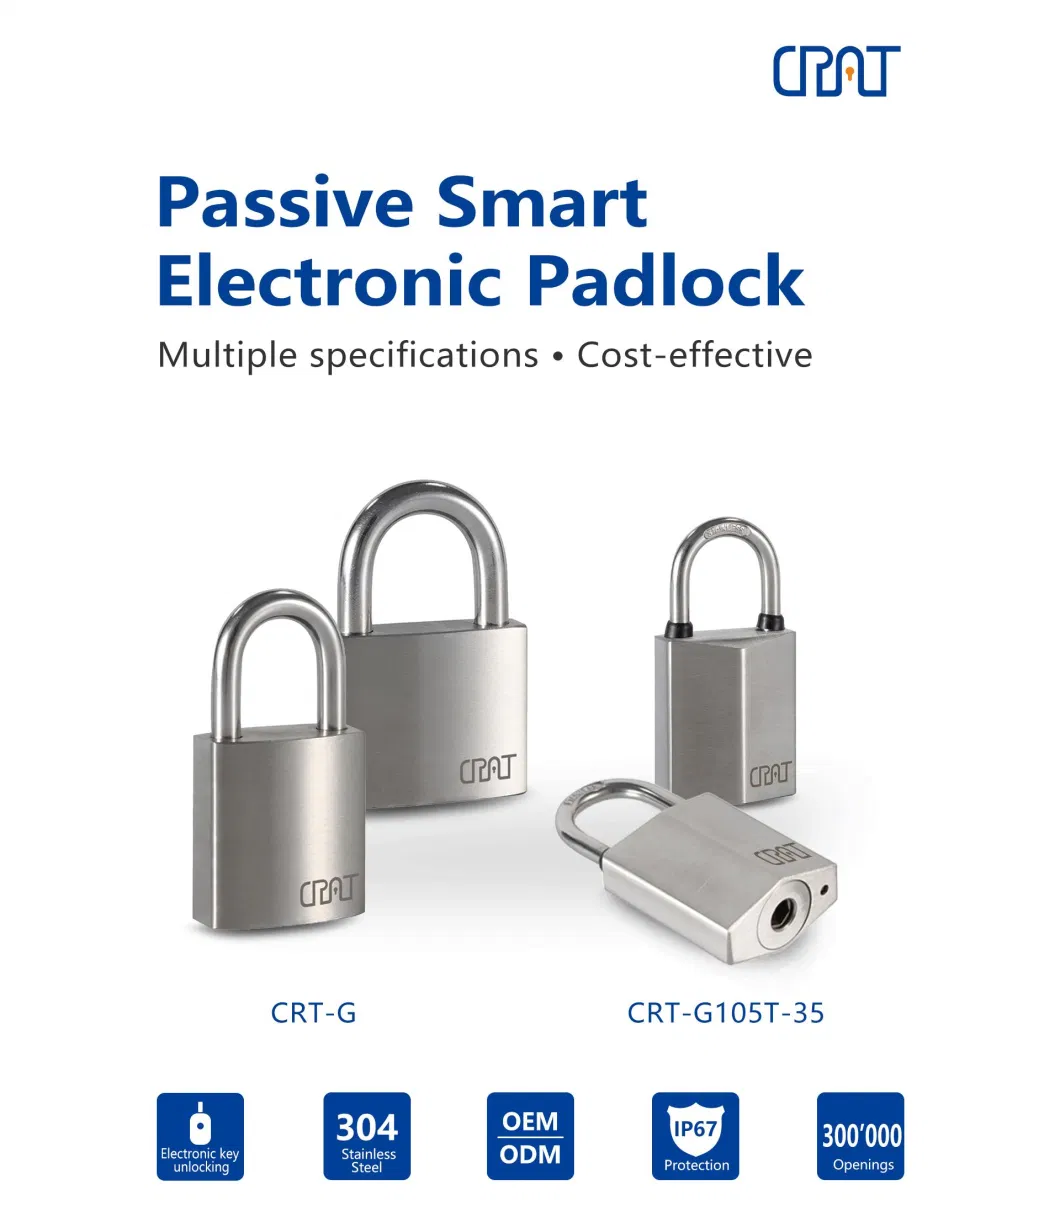 High Security Electronic Passive Smart Cyberlock Padlock